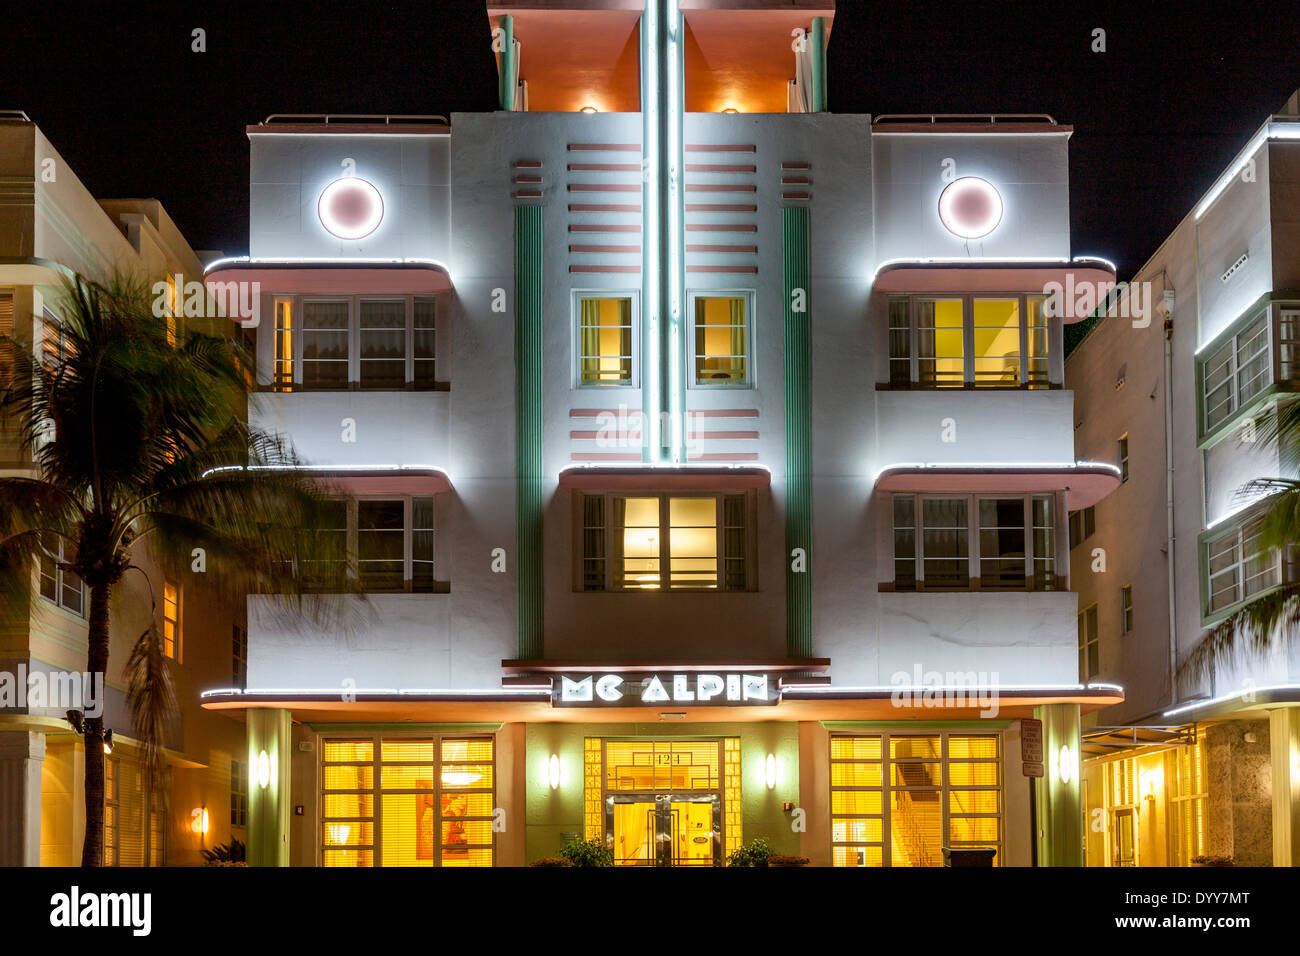 The MC ALPIN Hotel, South Beach, Miami, Florida, USA Stock Photo